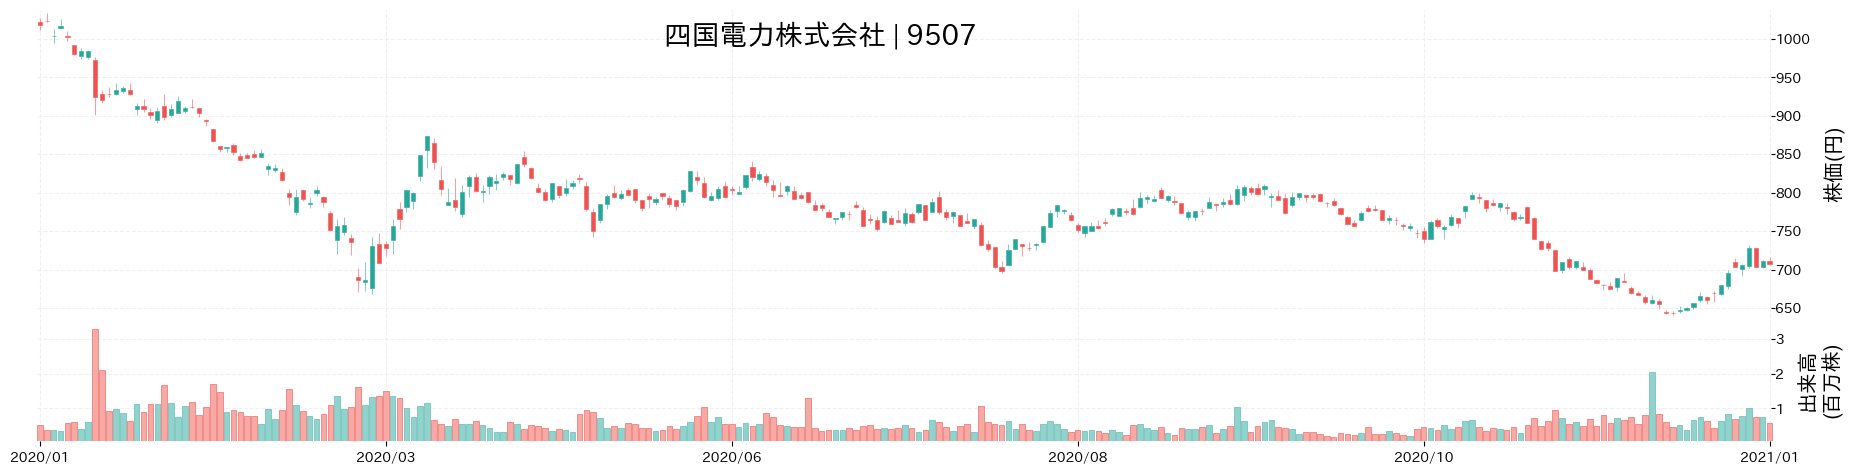 四国電力の株価推移(2020)